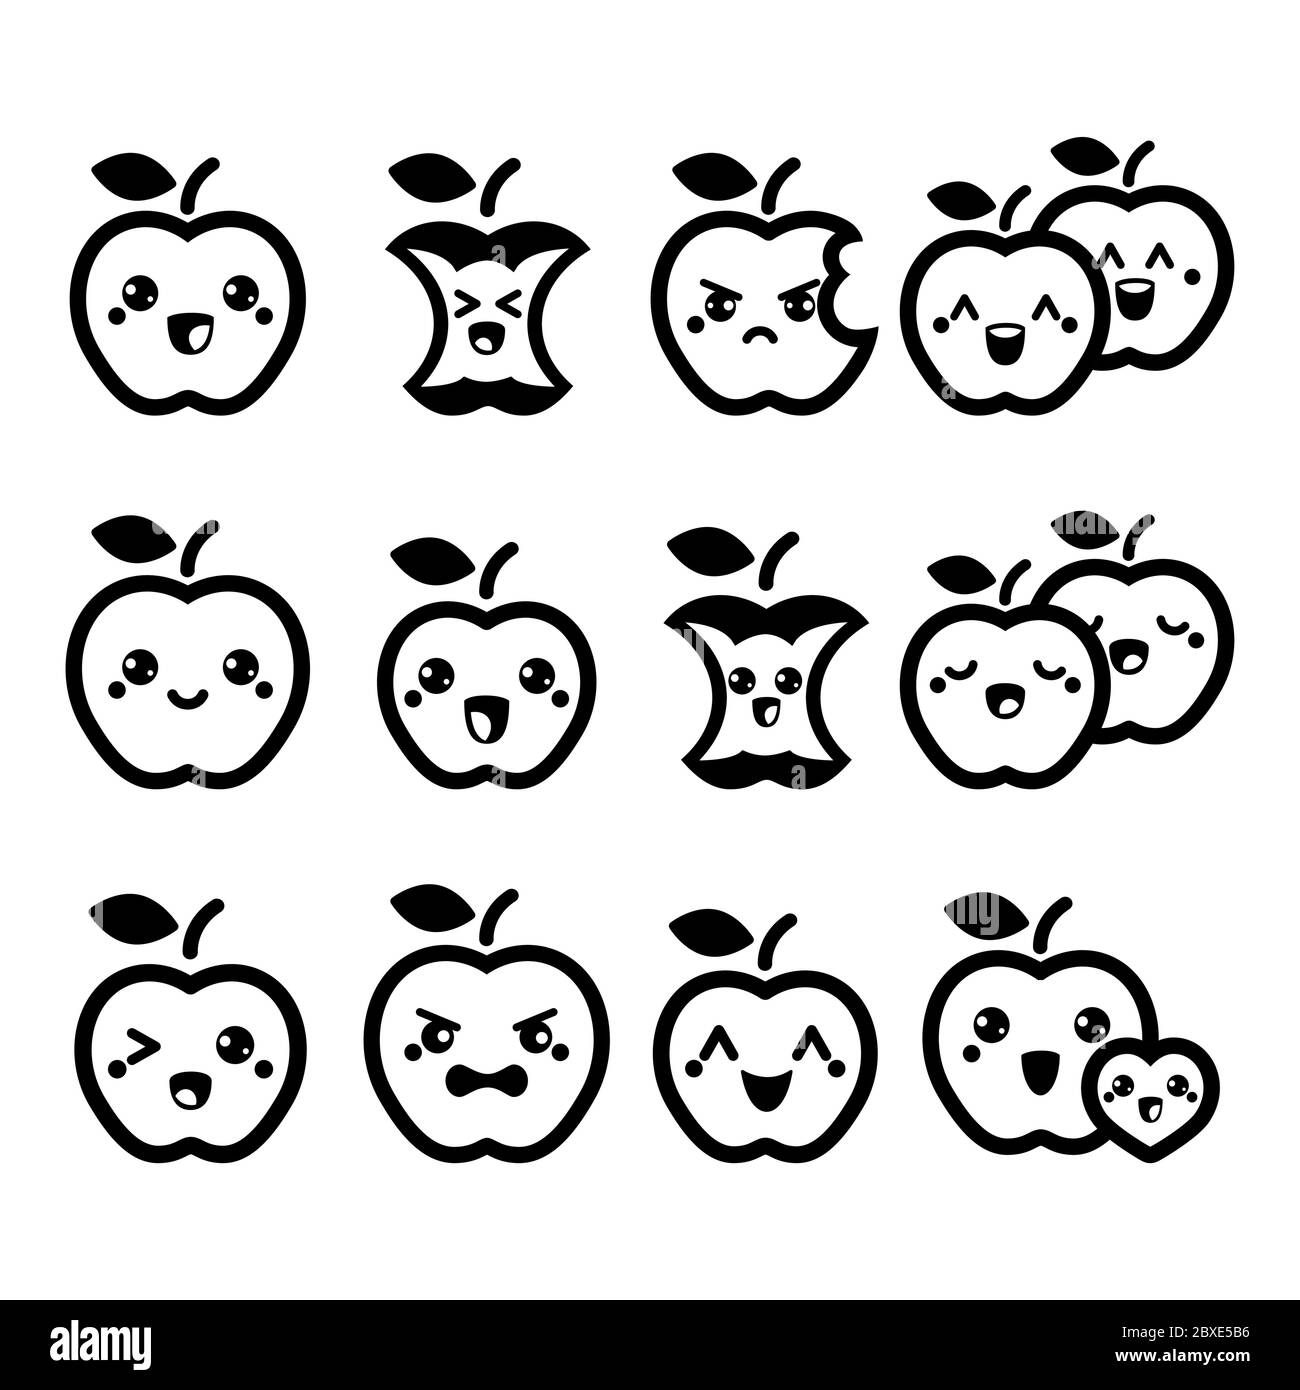 Cute Kawaii apple vector icon set - fruit, apples with faces design set Stock Vector